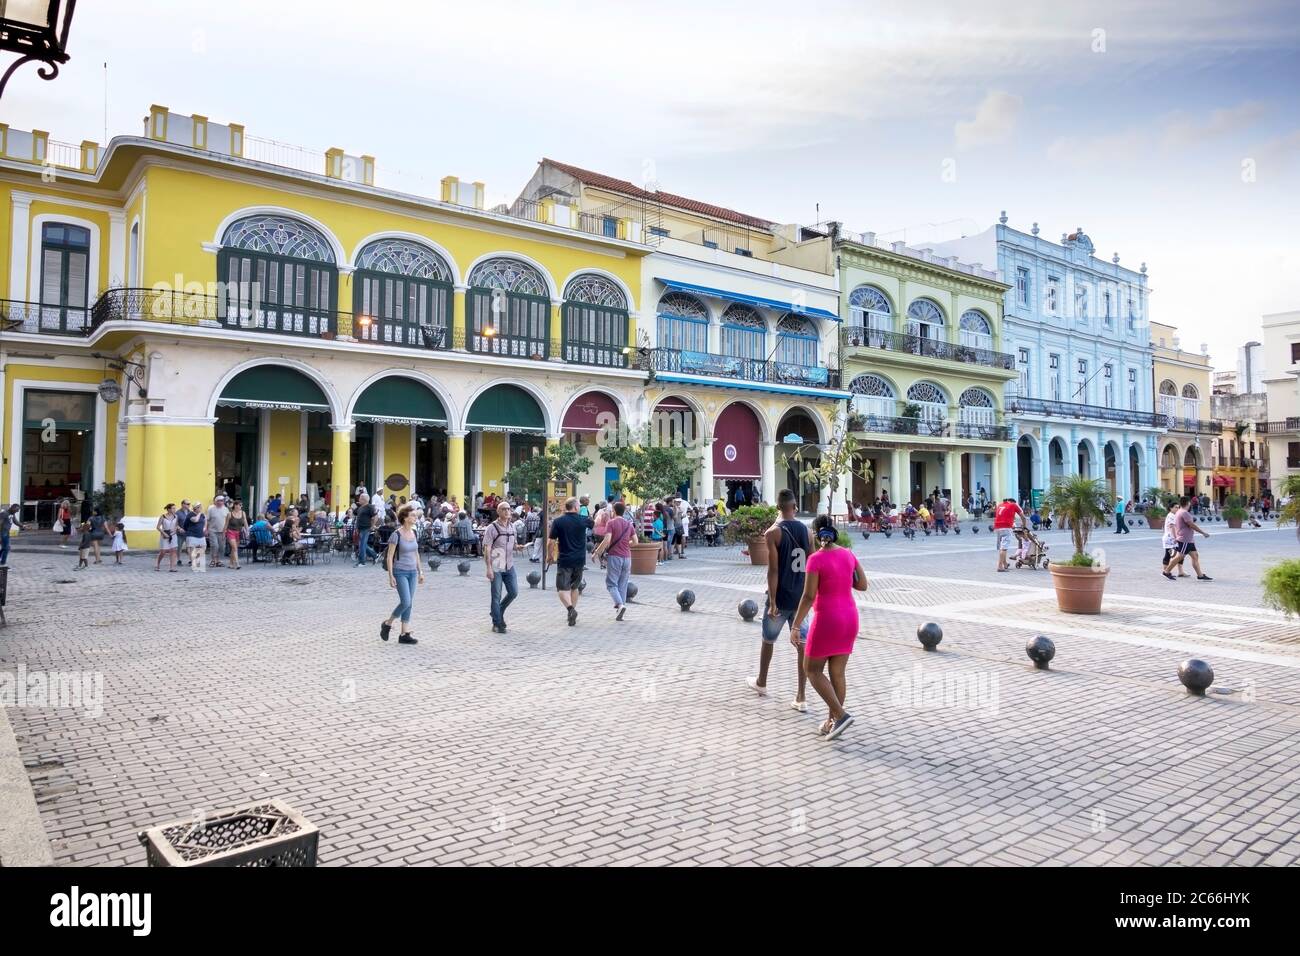 Cuba, l'Avana, Plaza Vieja, facciate colorate, passers-by e caffetteria di strada Foto Stock